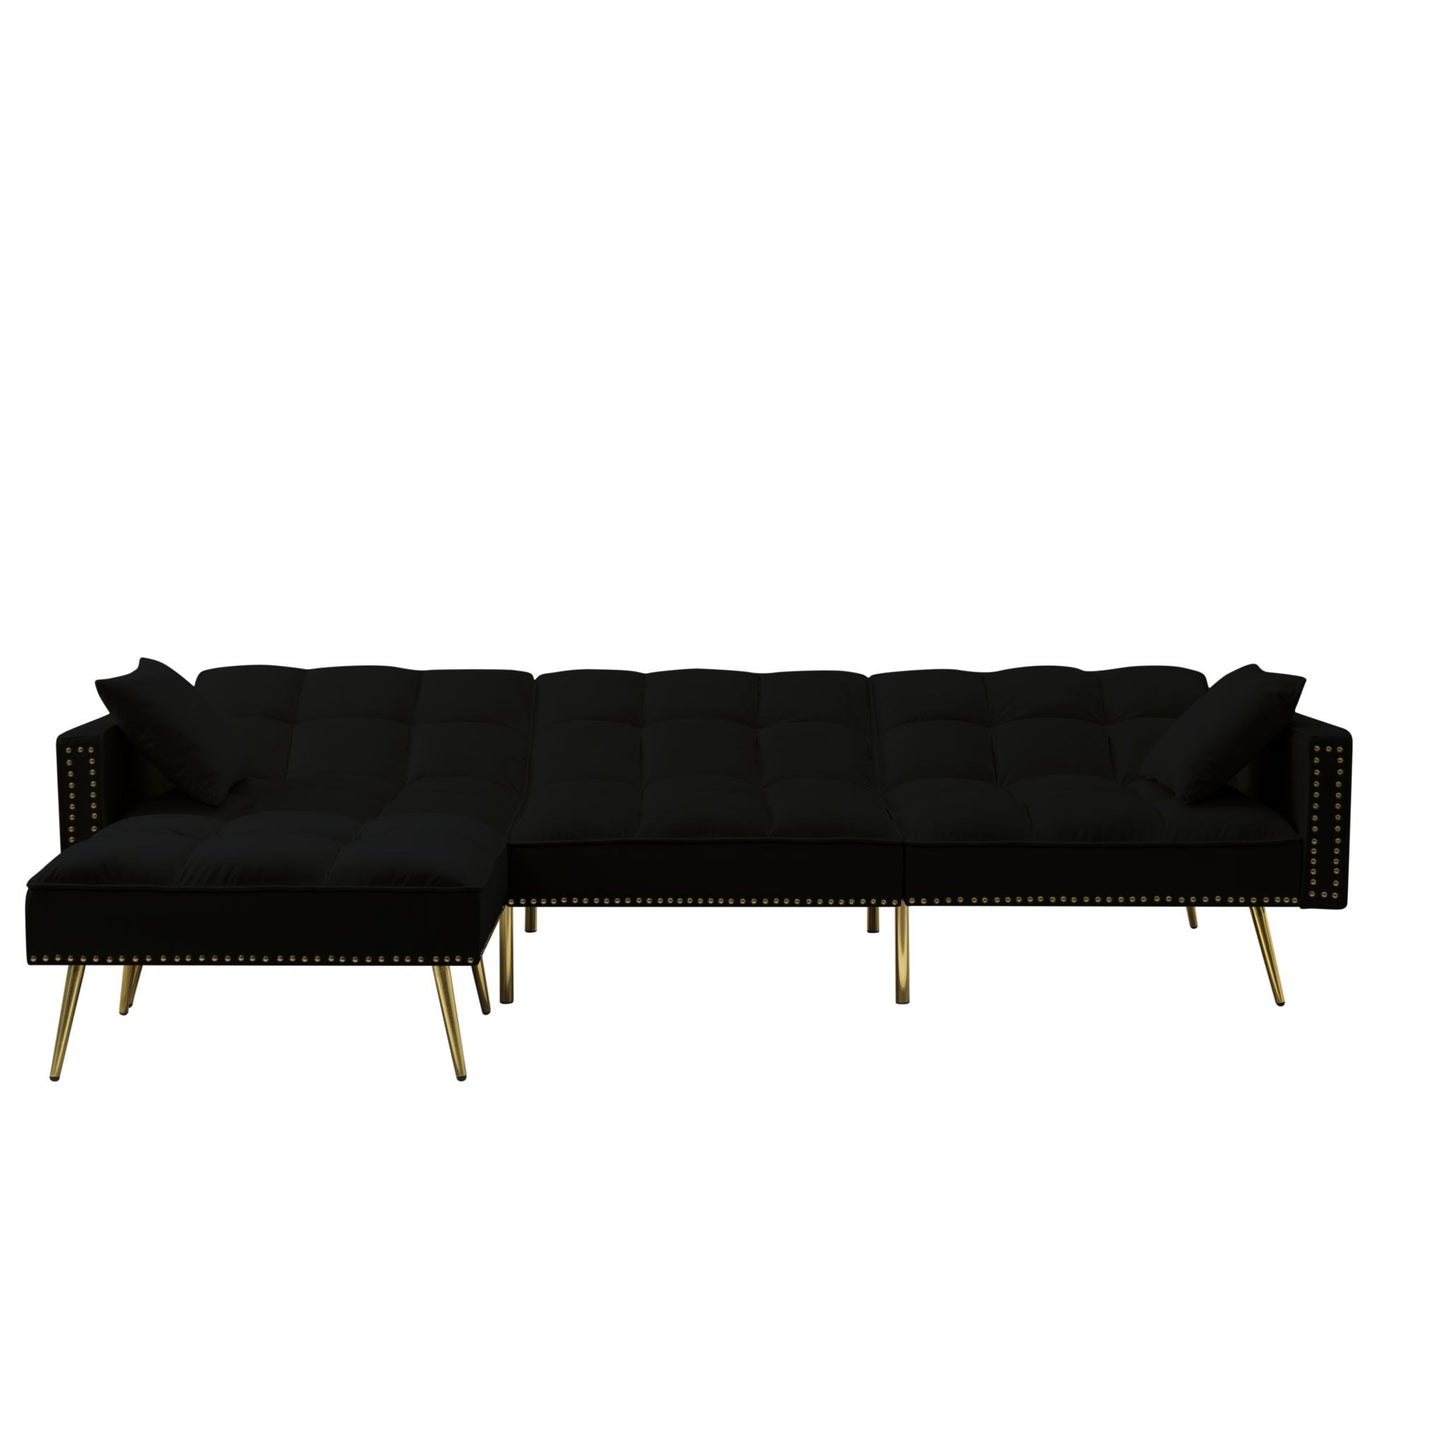 107.7” Sectional Sleeper Sofa bed